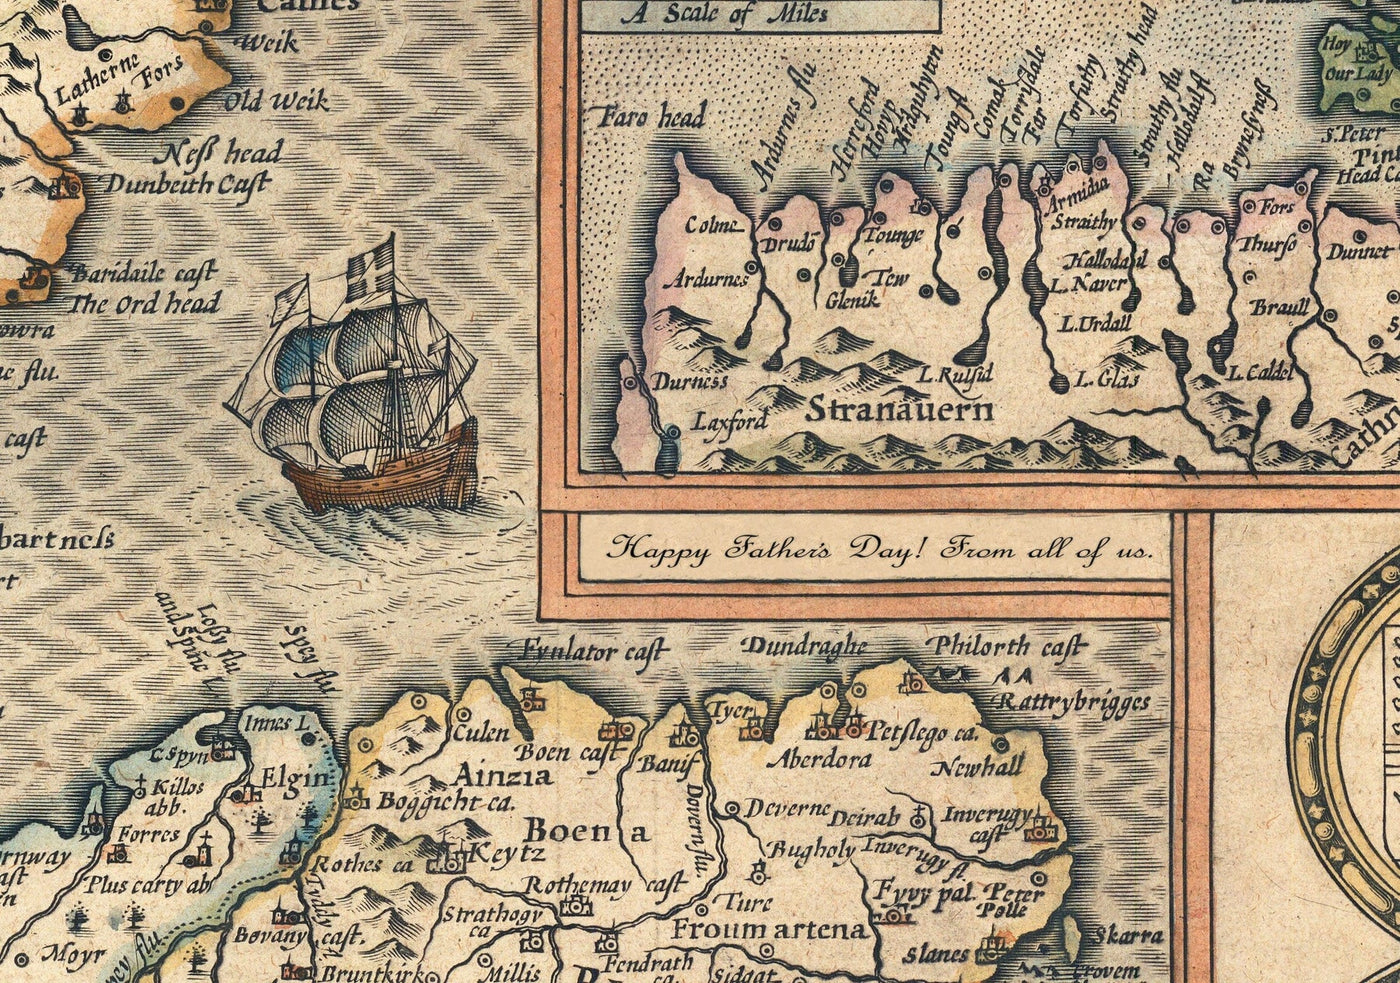 Ancienne Carte de Scandinavie, 1539 - Carta Marina de Olaus Magnus - Mer Monster Carte - Pays nordiques Danemark, Suède, Finlande